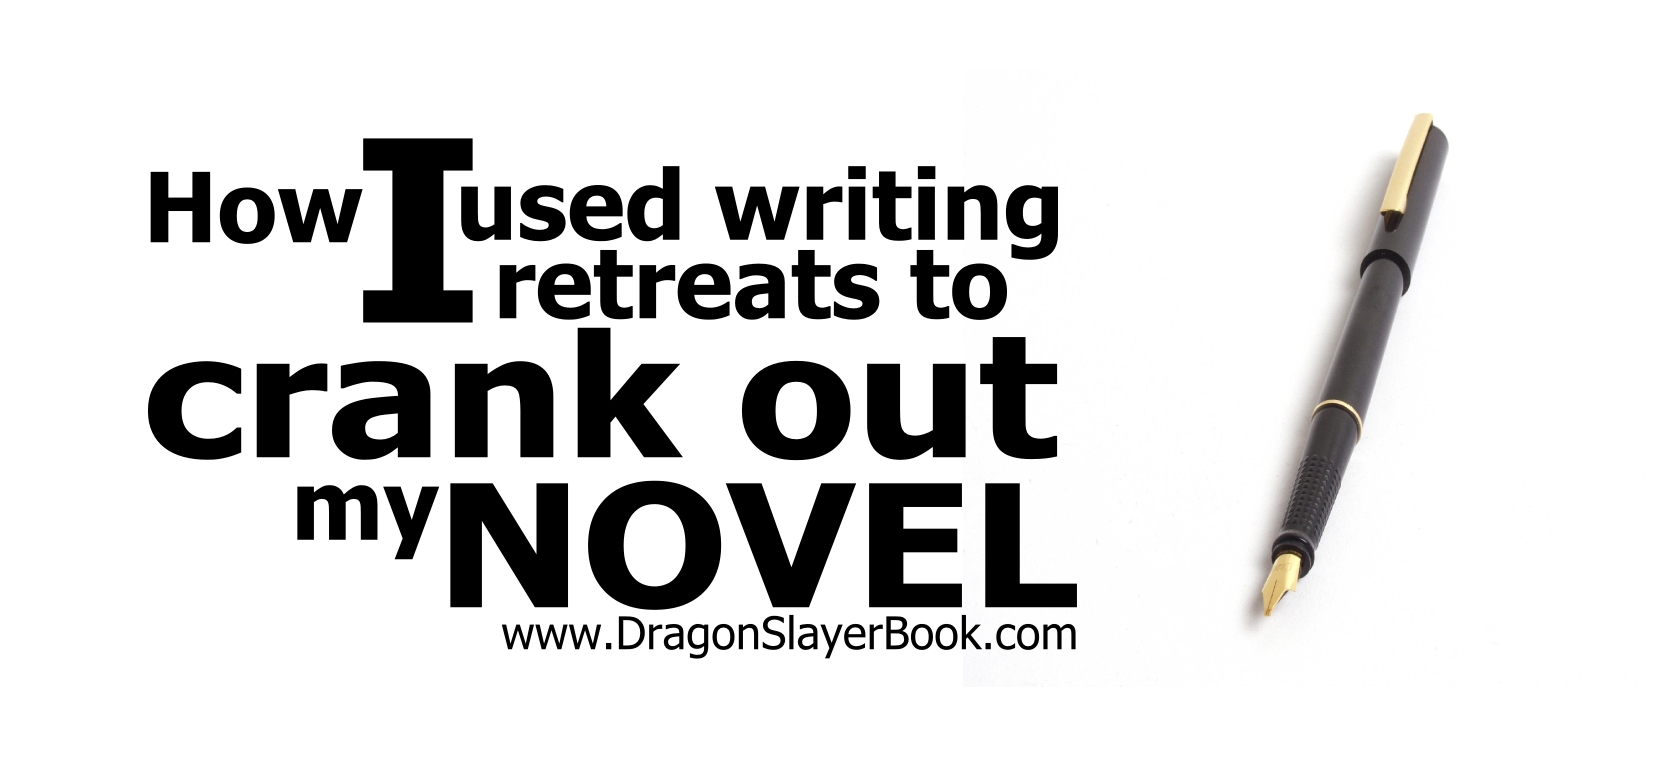 How to write a novel using writing retreats